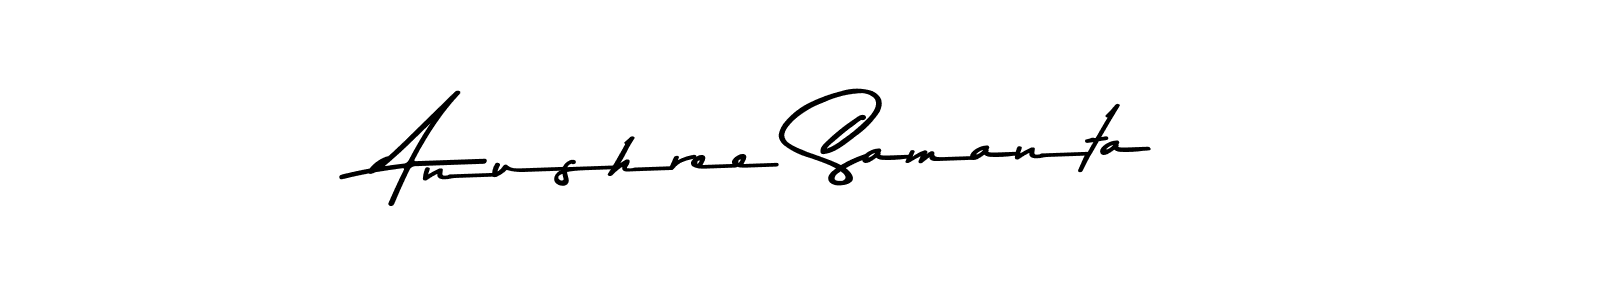 How to Draw Anushree Samanta signature style? Asem Kandis PERSONAL USE is a latest design signature styles for name Anushree Samanta. Anushree Samanta signature style 9 images and pictures png